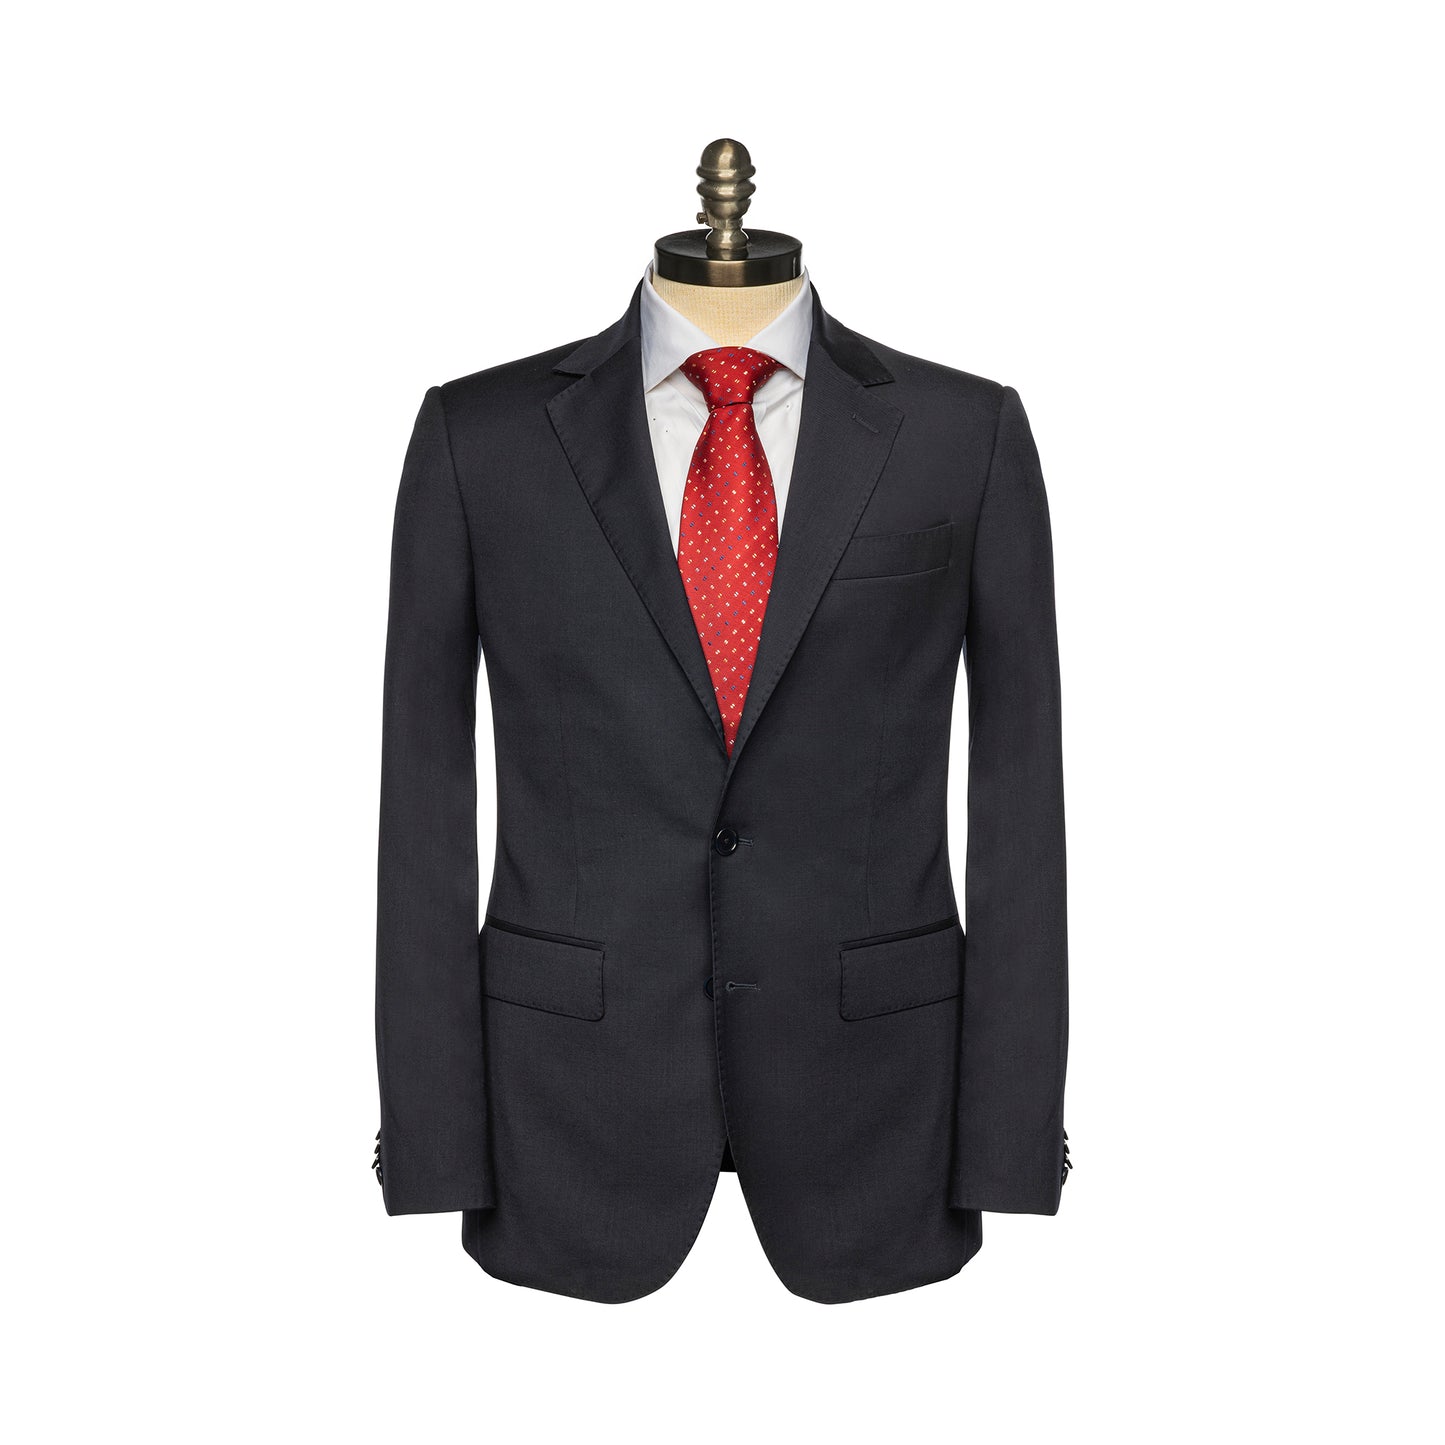 two pcs Suit for men in dark navy color